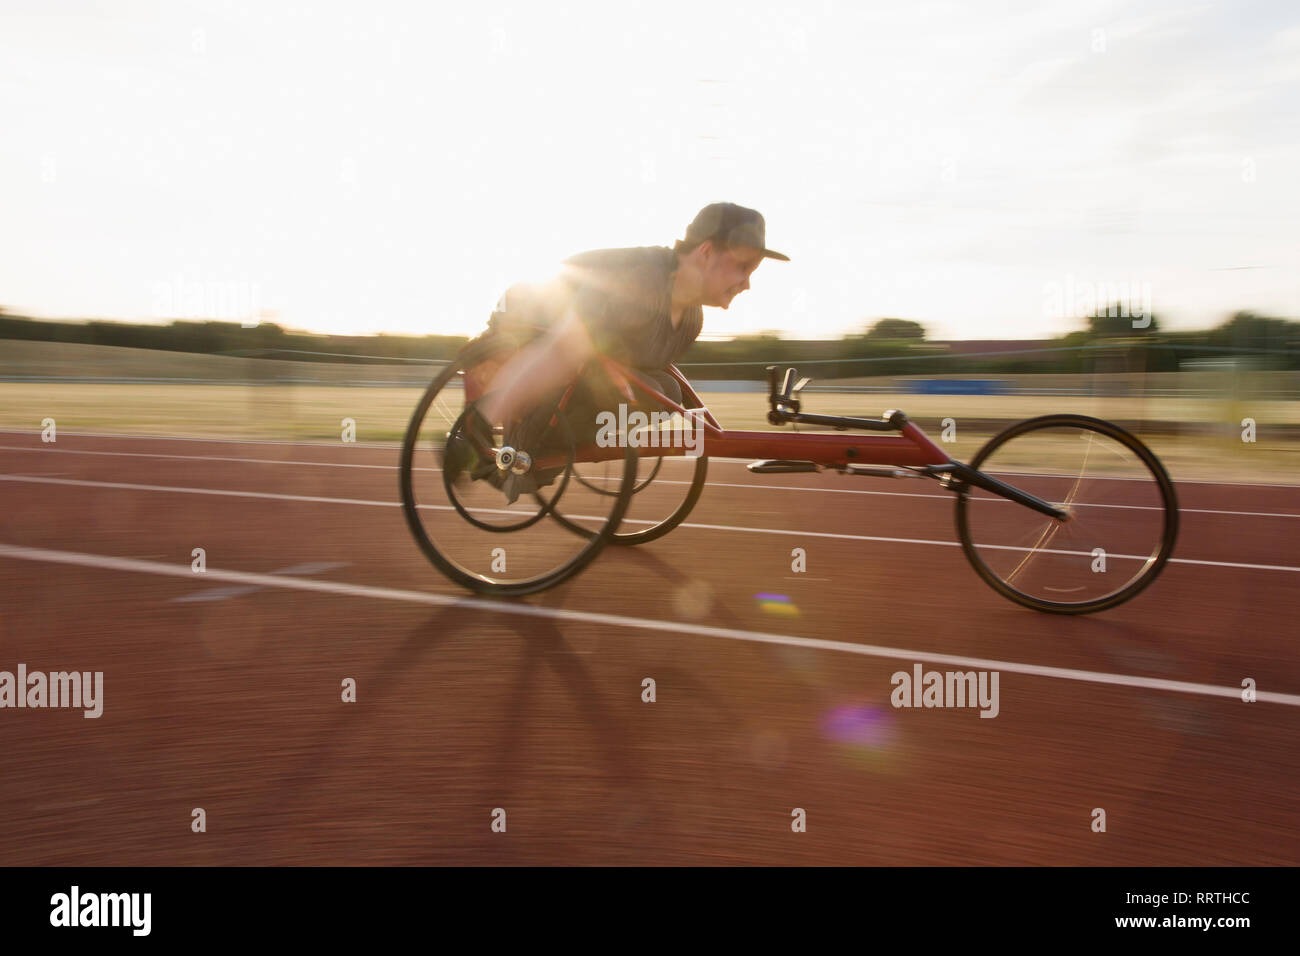 Determined teenage boy paraplegic athlete speeding along sports track in wheelchair race Stock Photo